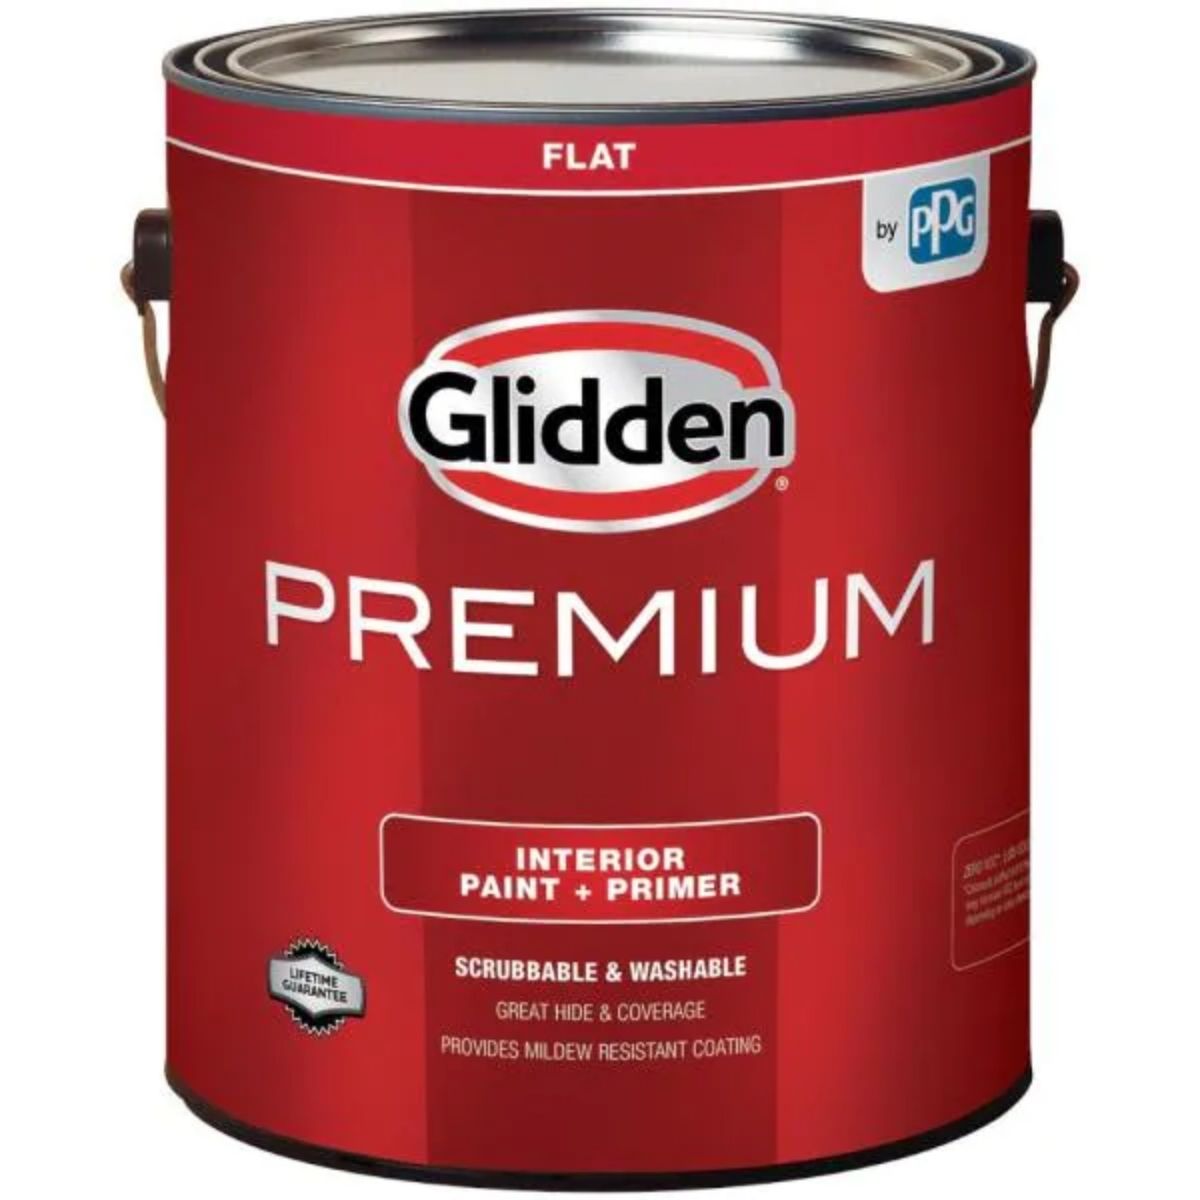 Glidden Premium 1 gal. Base 1 Flat Interior Paint